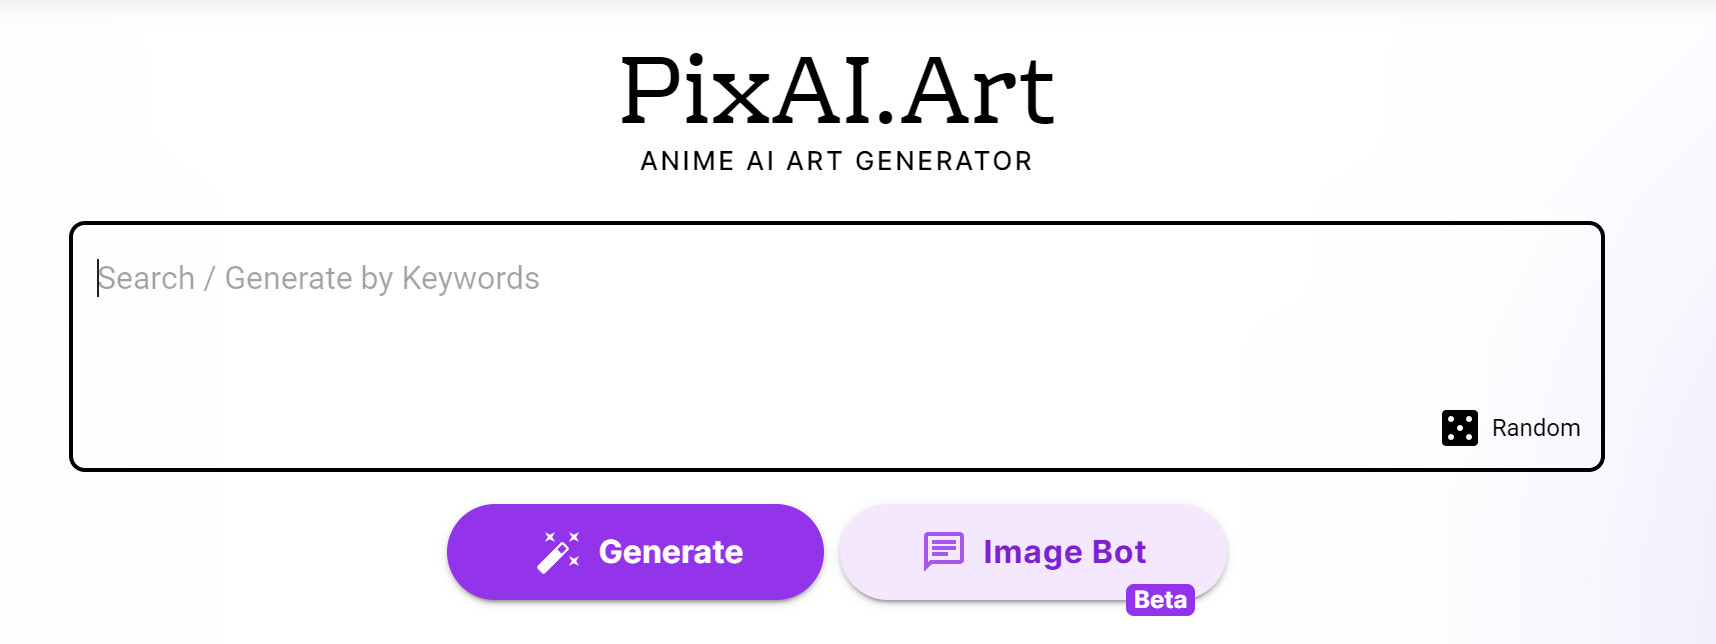 AI Hentai Generator